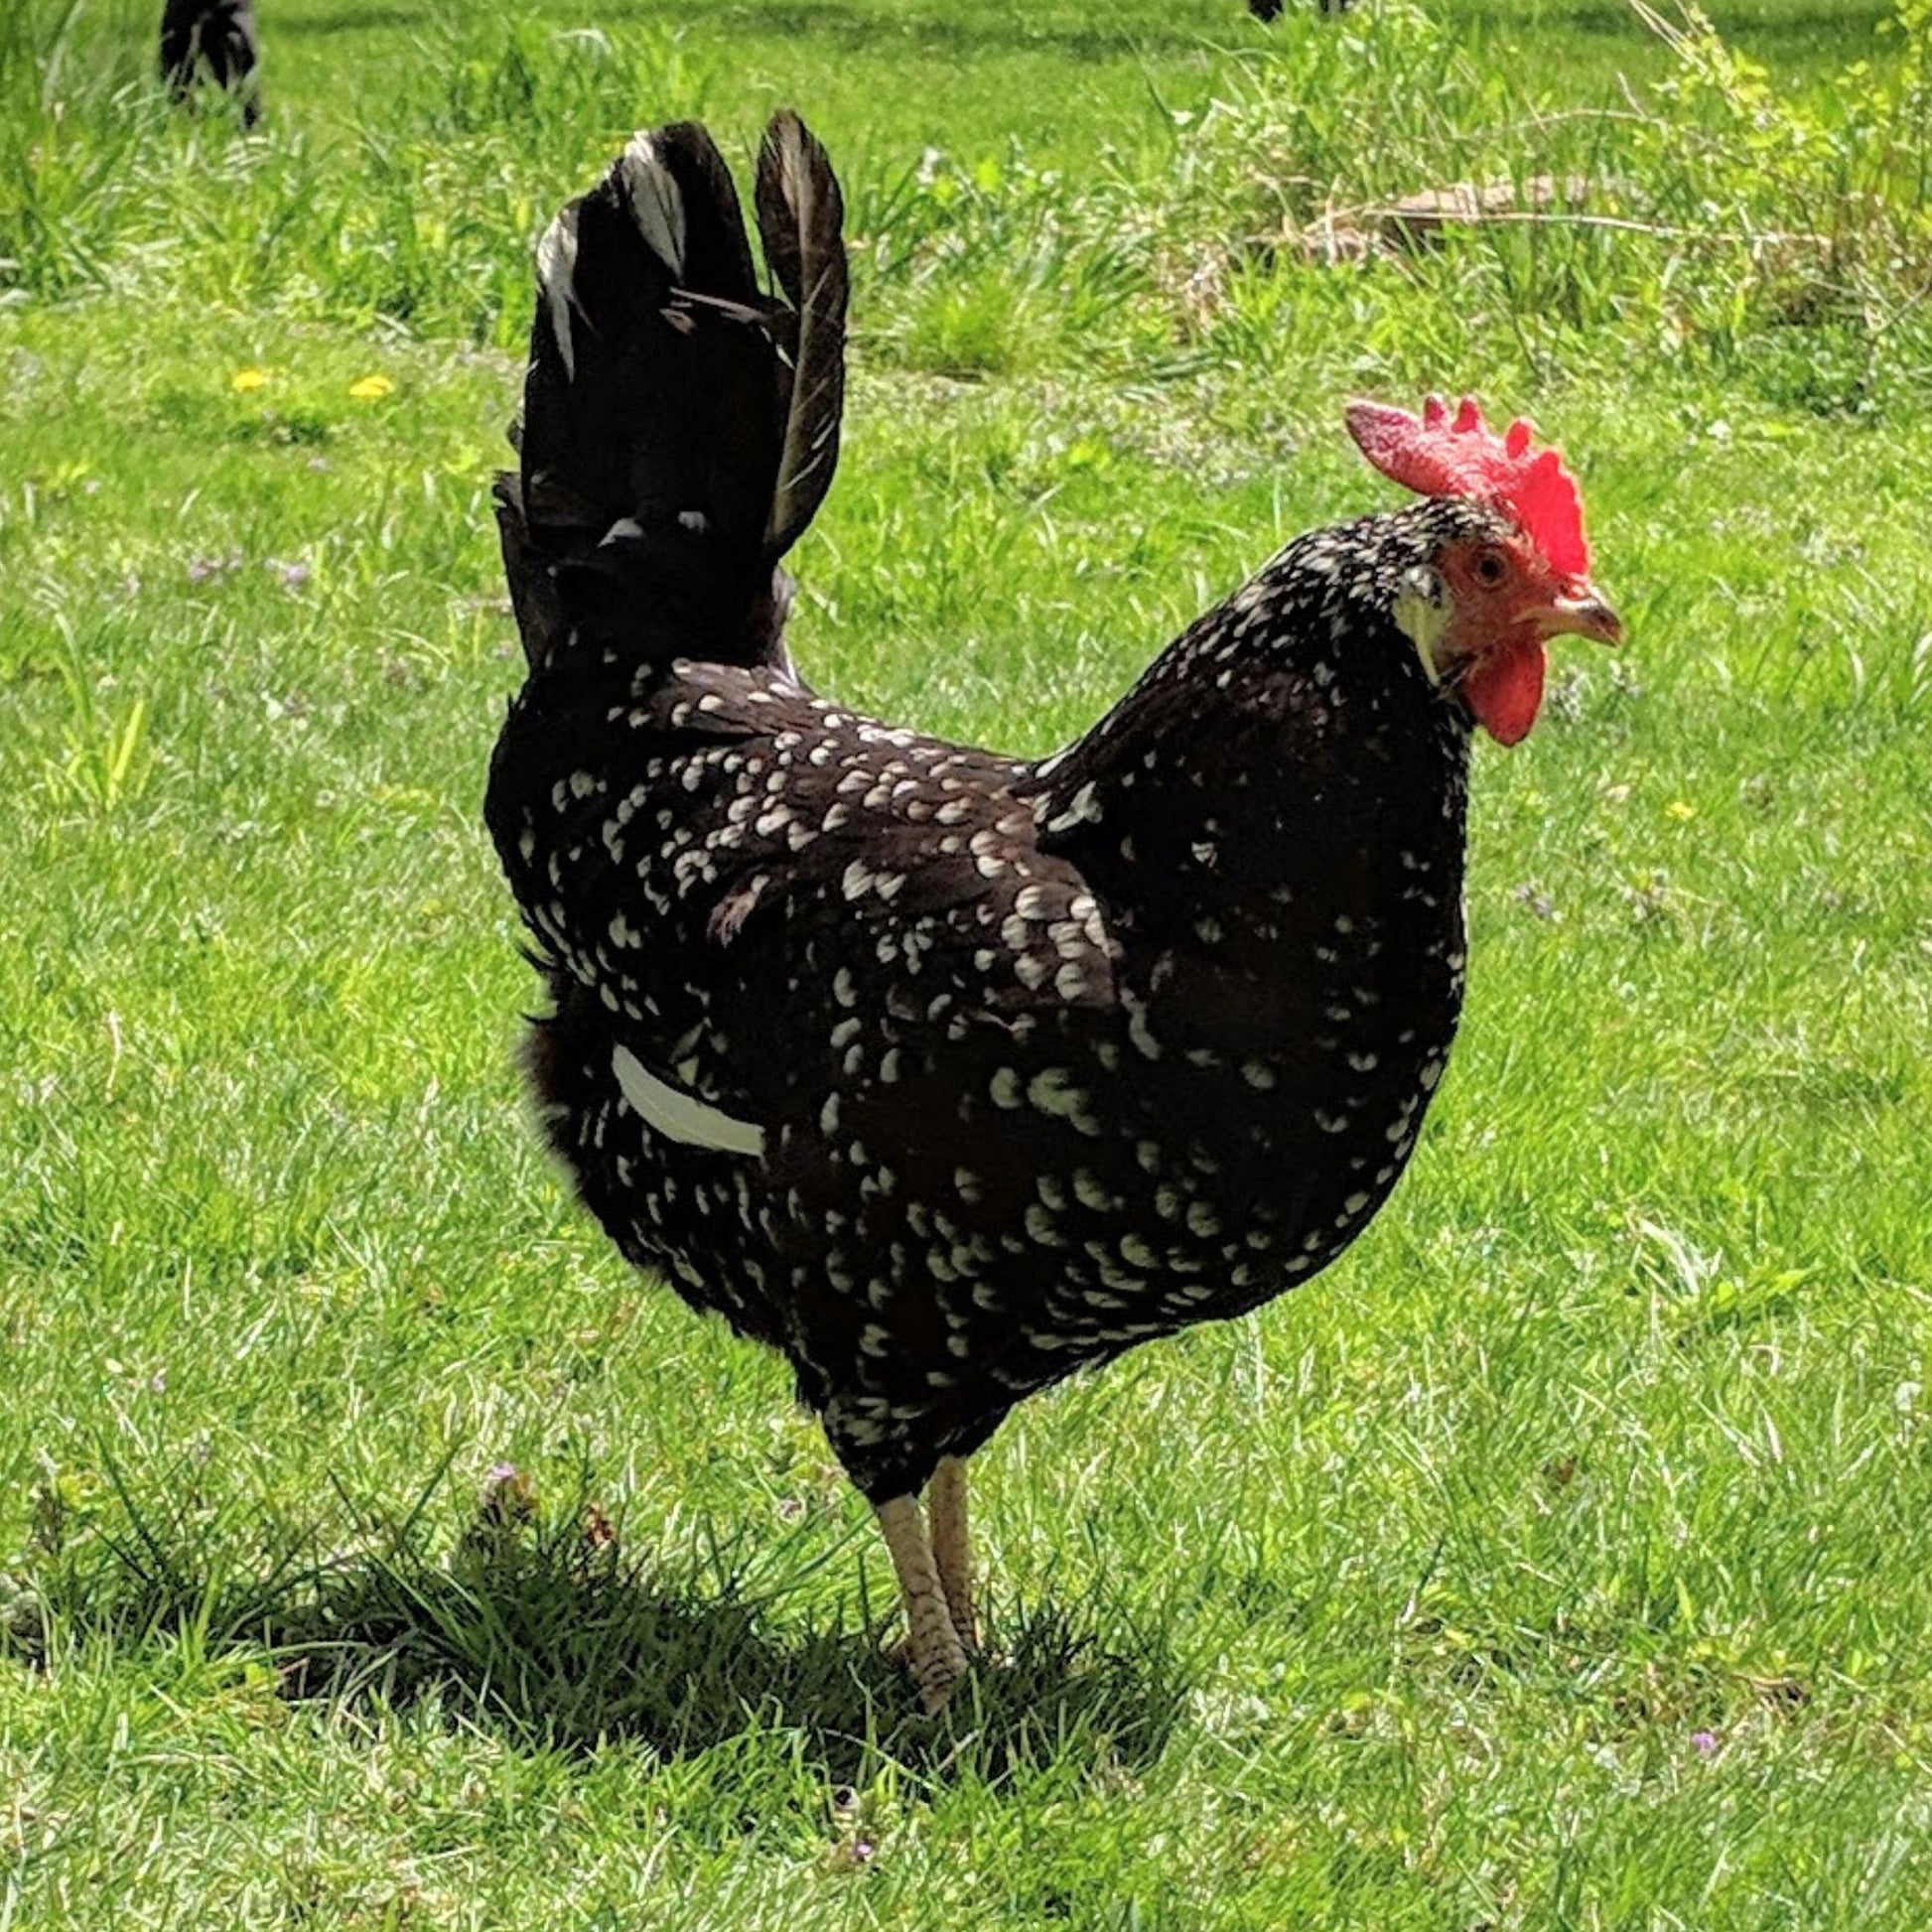 Ancona chicken breed